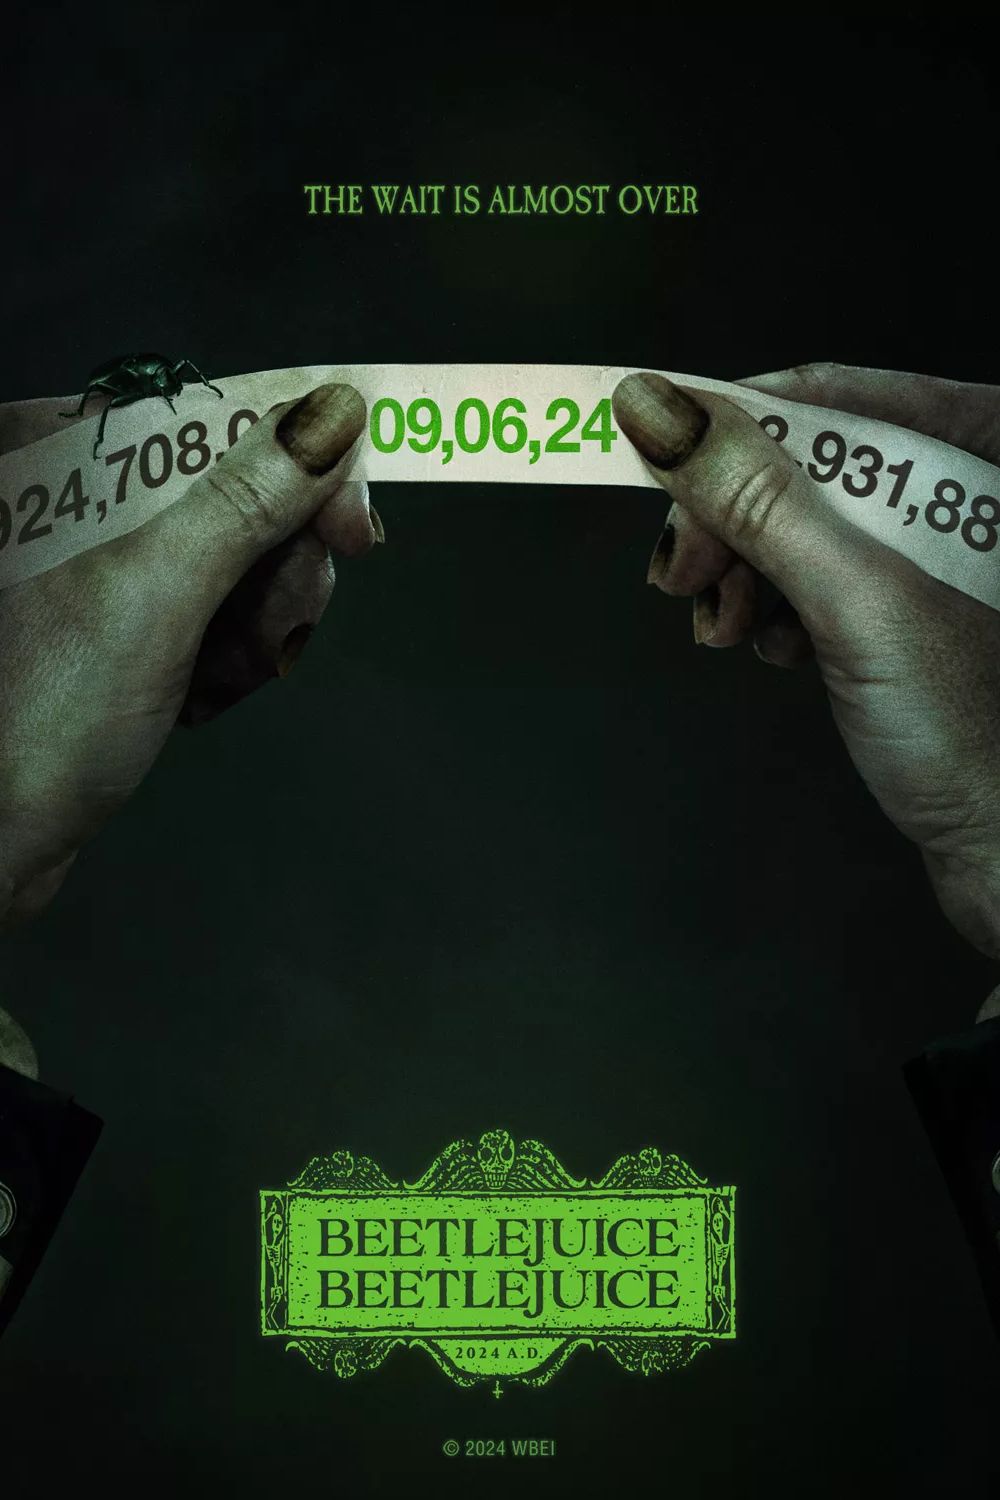 Beetlejuice 2 Footage Reveals How Michael Keaton Returns & Beetlejuice’s Dead Wife